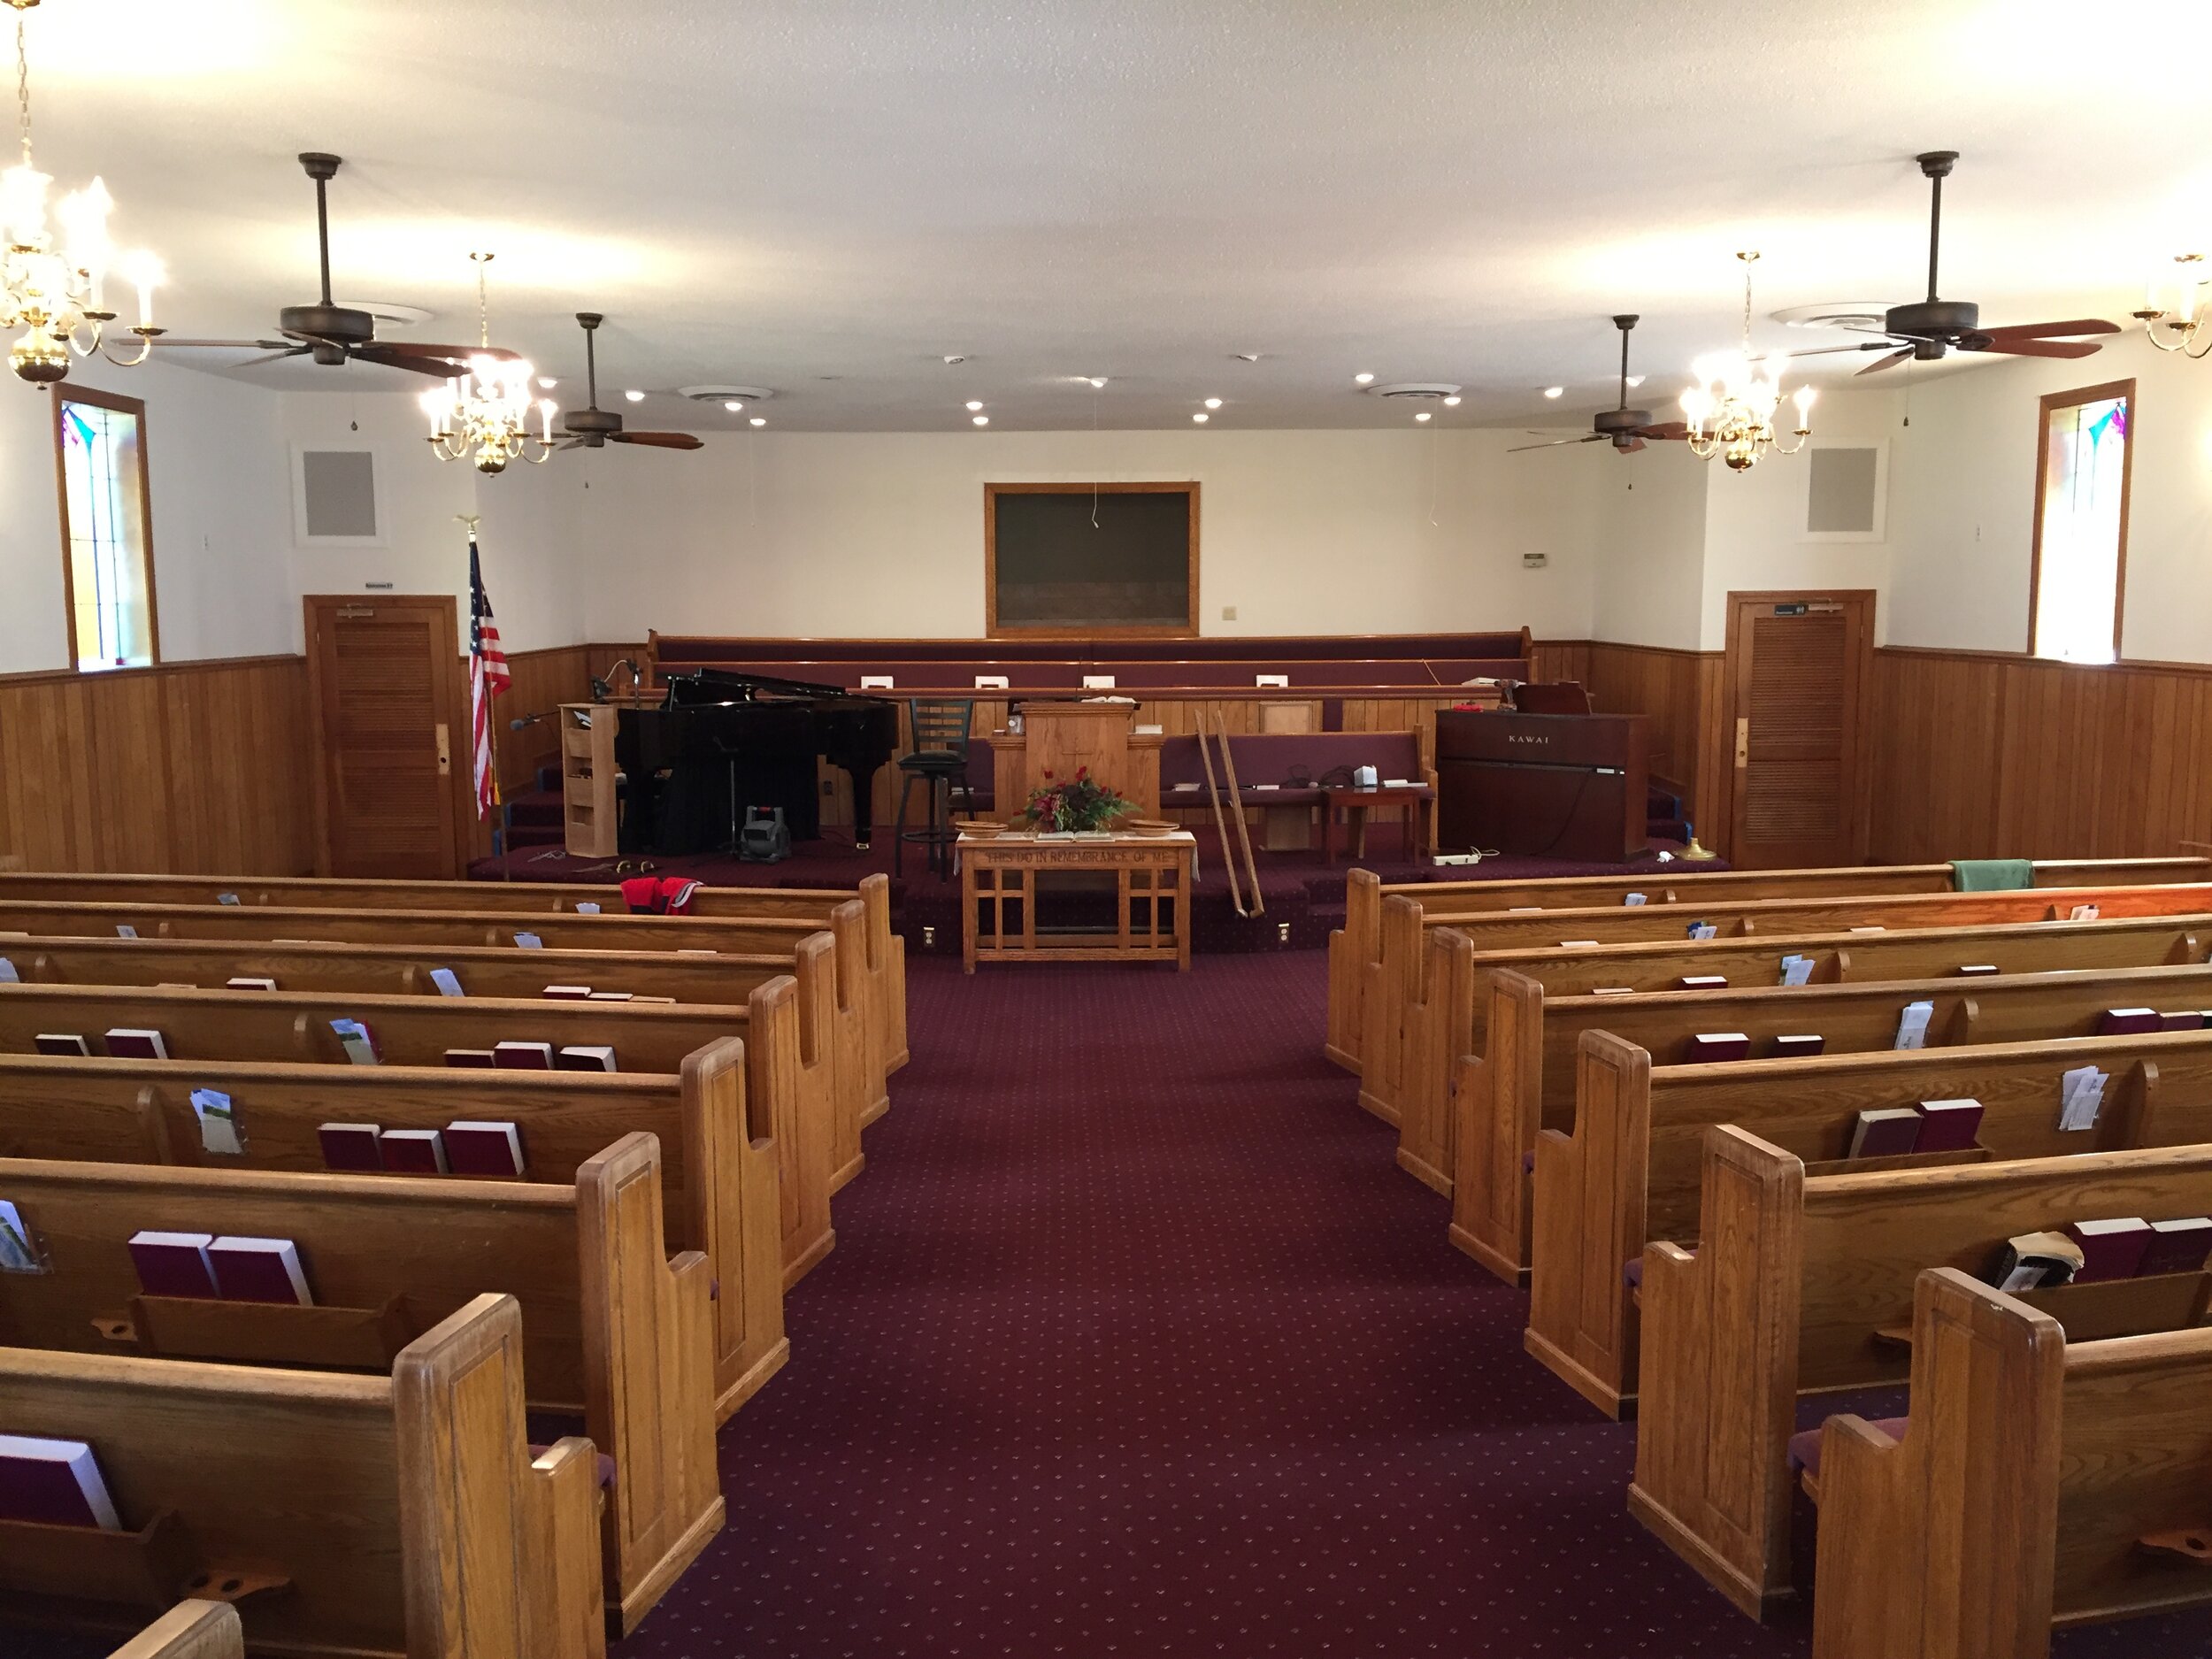 Church interior 1.jpg